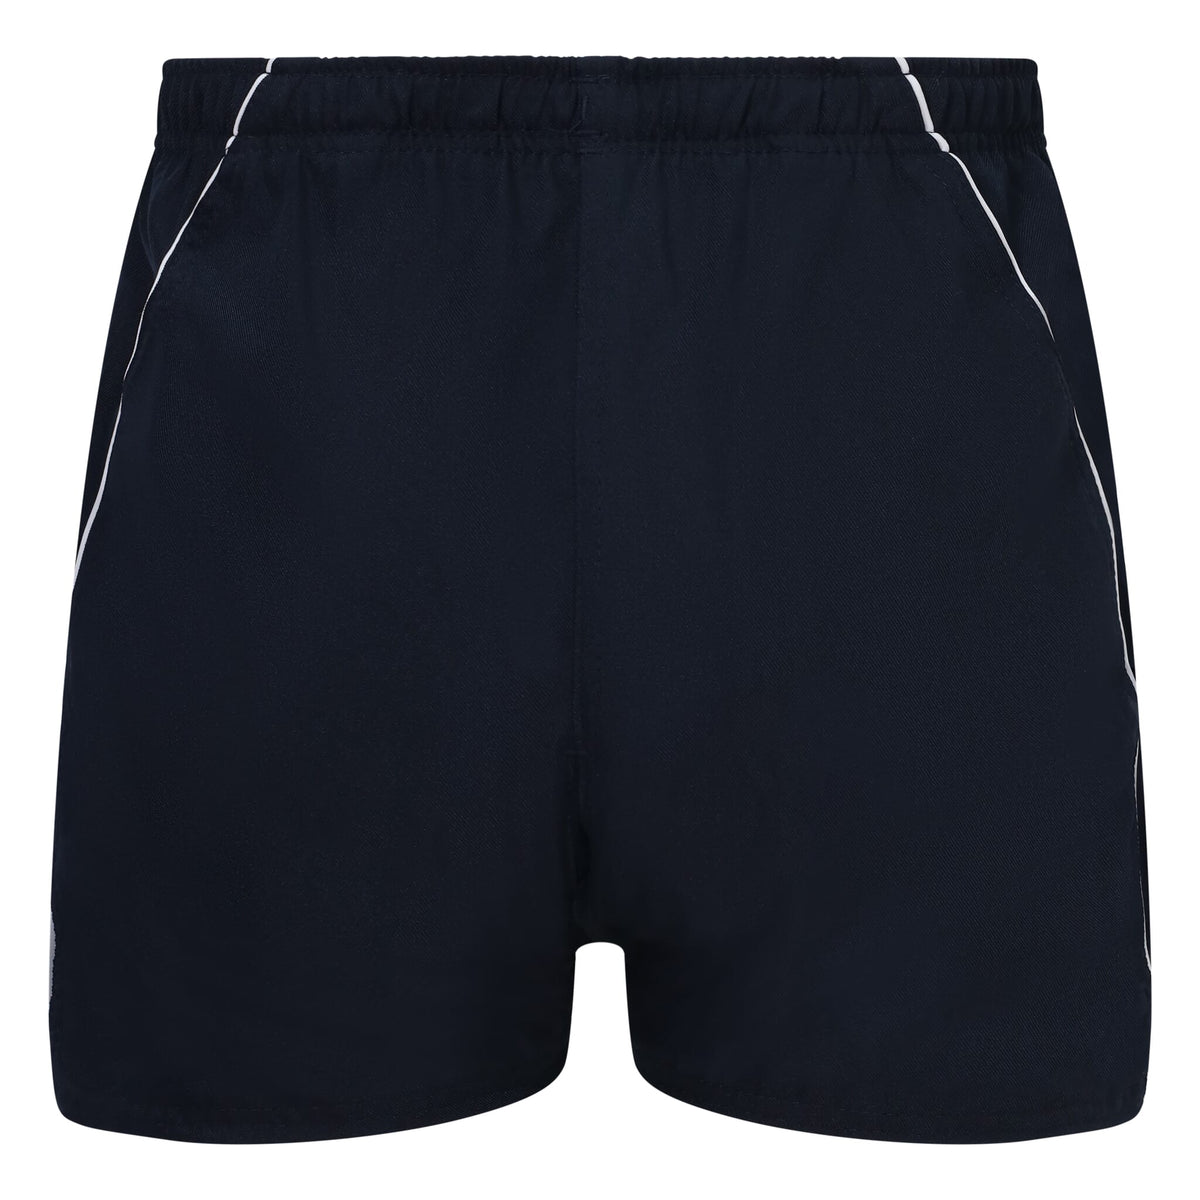 Ryde School Match Shorts